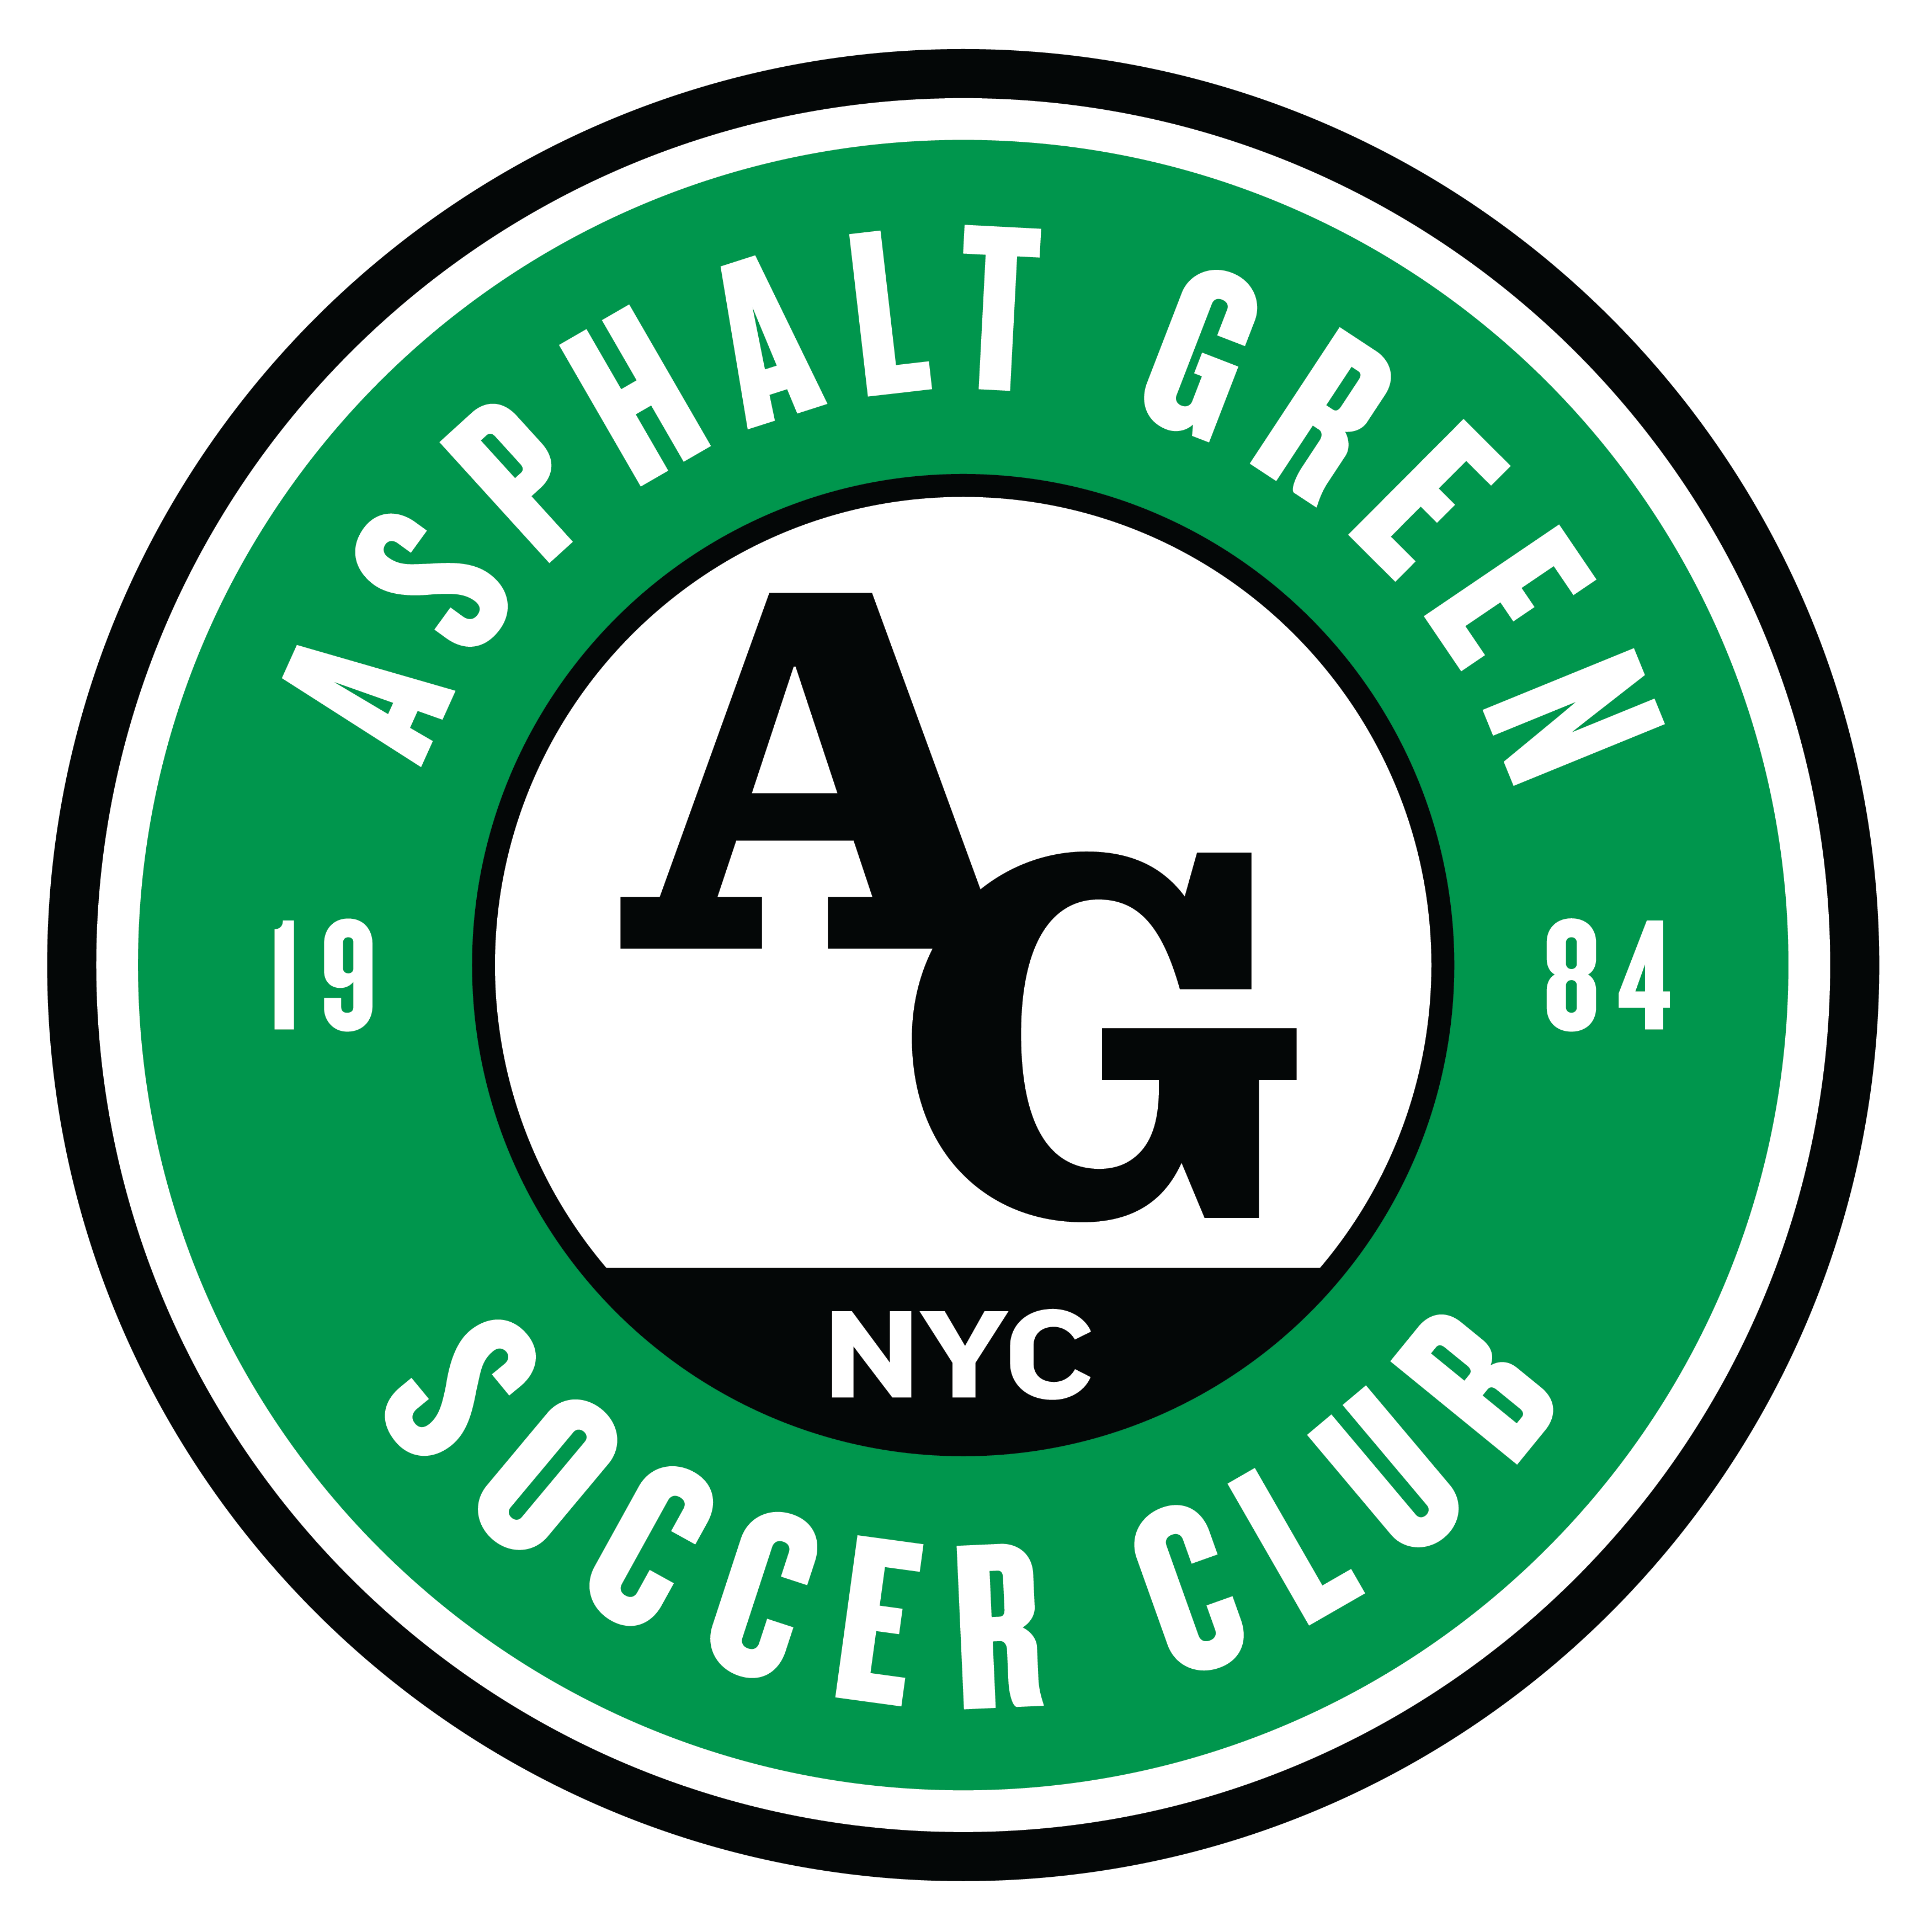 Asphalt Green Soccer Club team badge